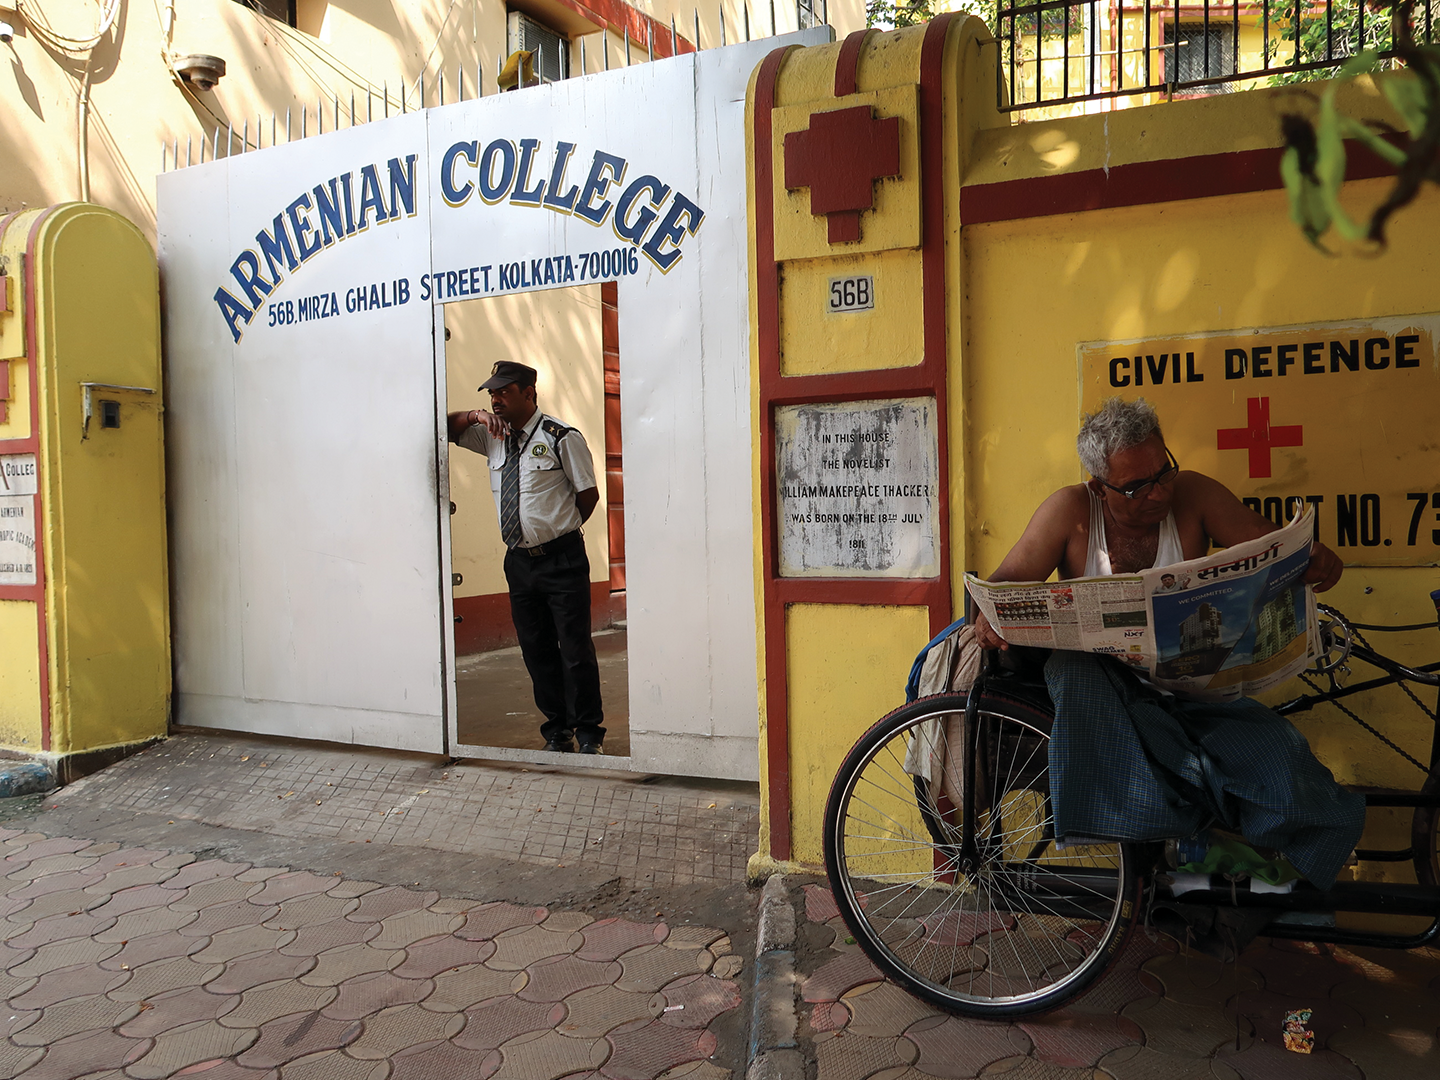 the gate of Armenian College in Kolkata